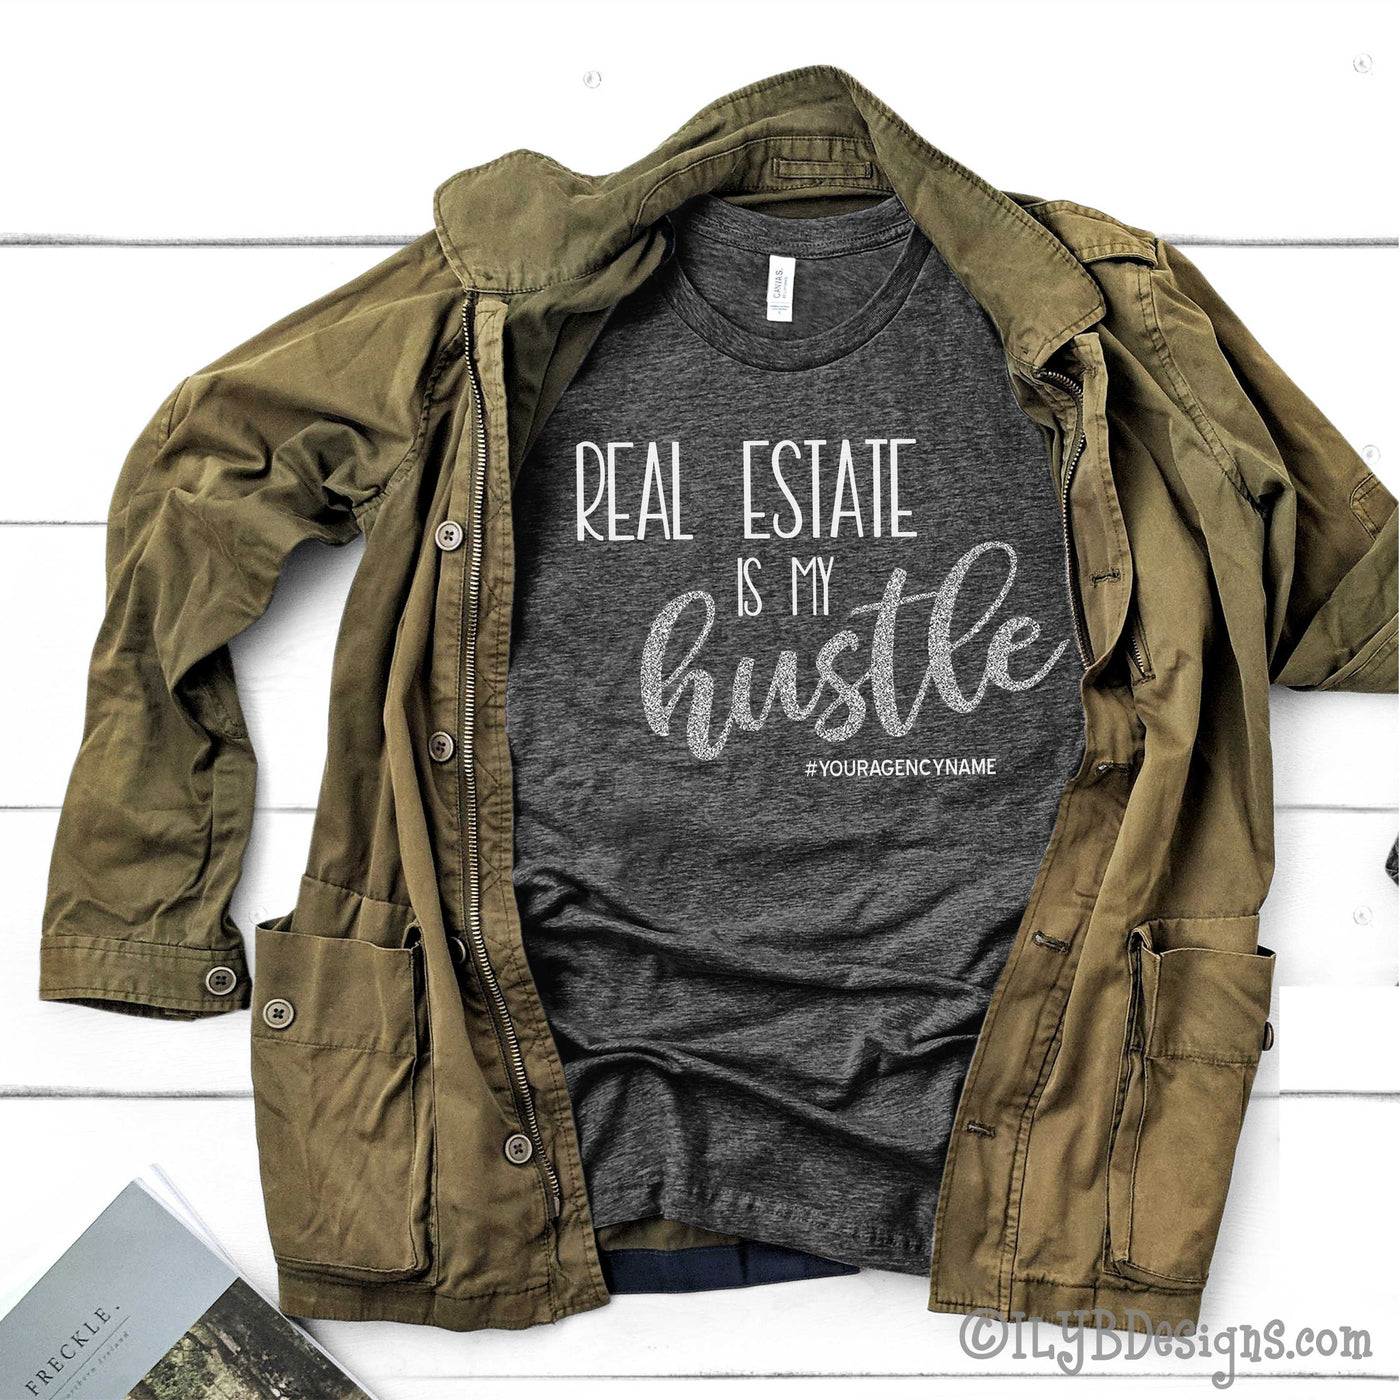 Real Estate is my Hustle Shirt - Realtor Shirts - Real Estate Shirts - ILYB Designs